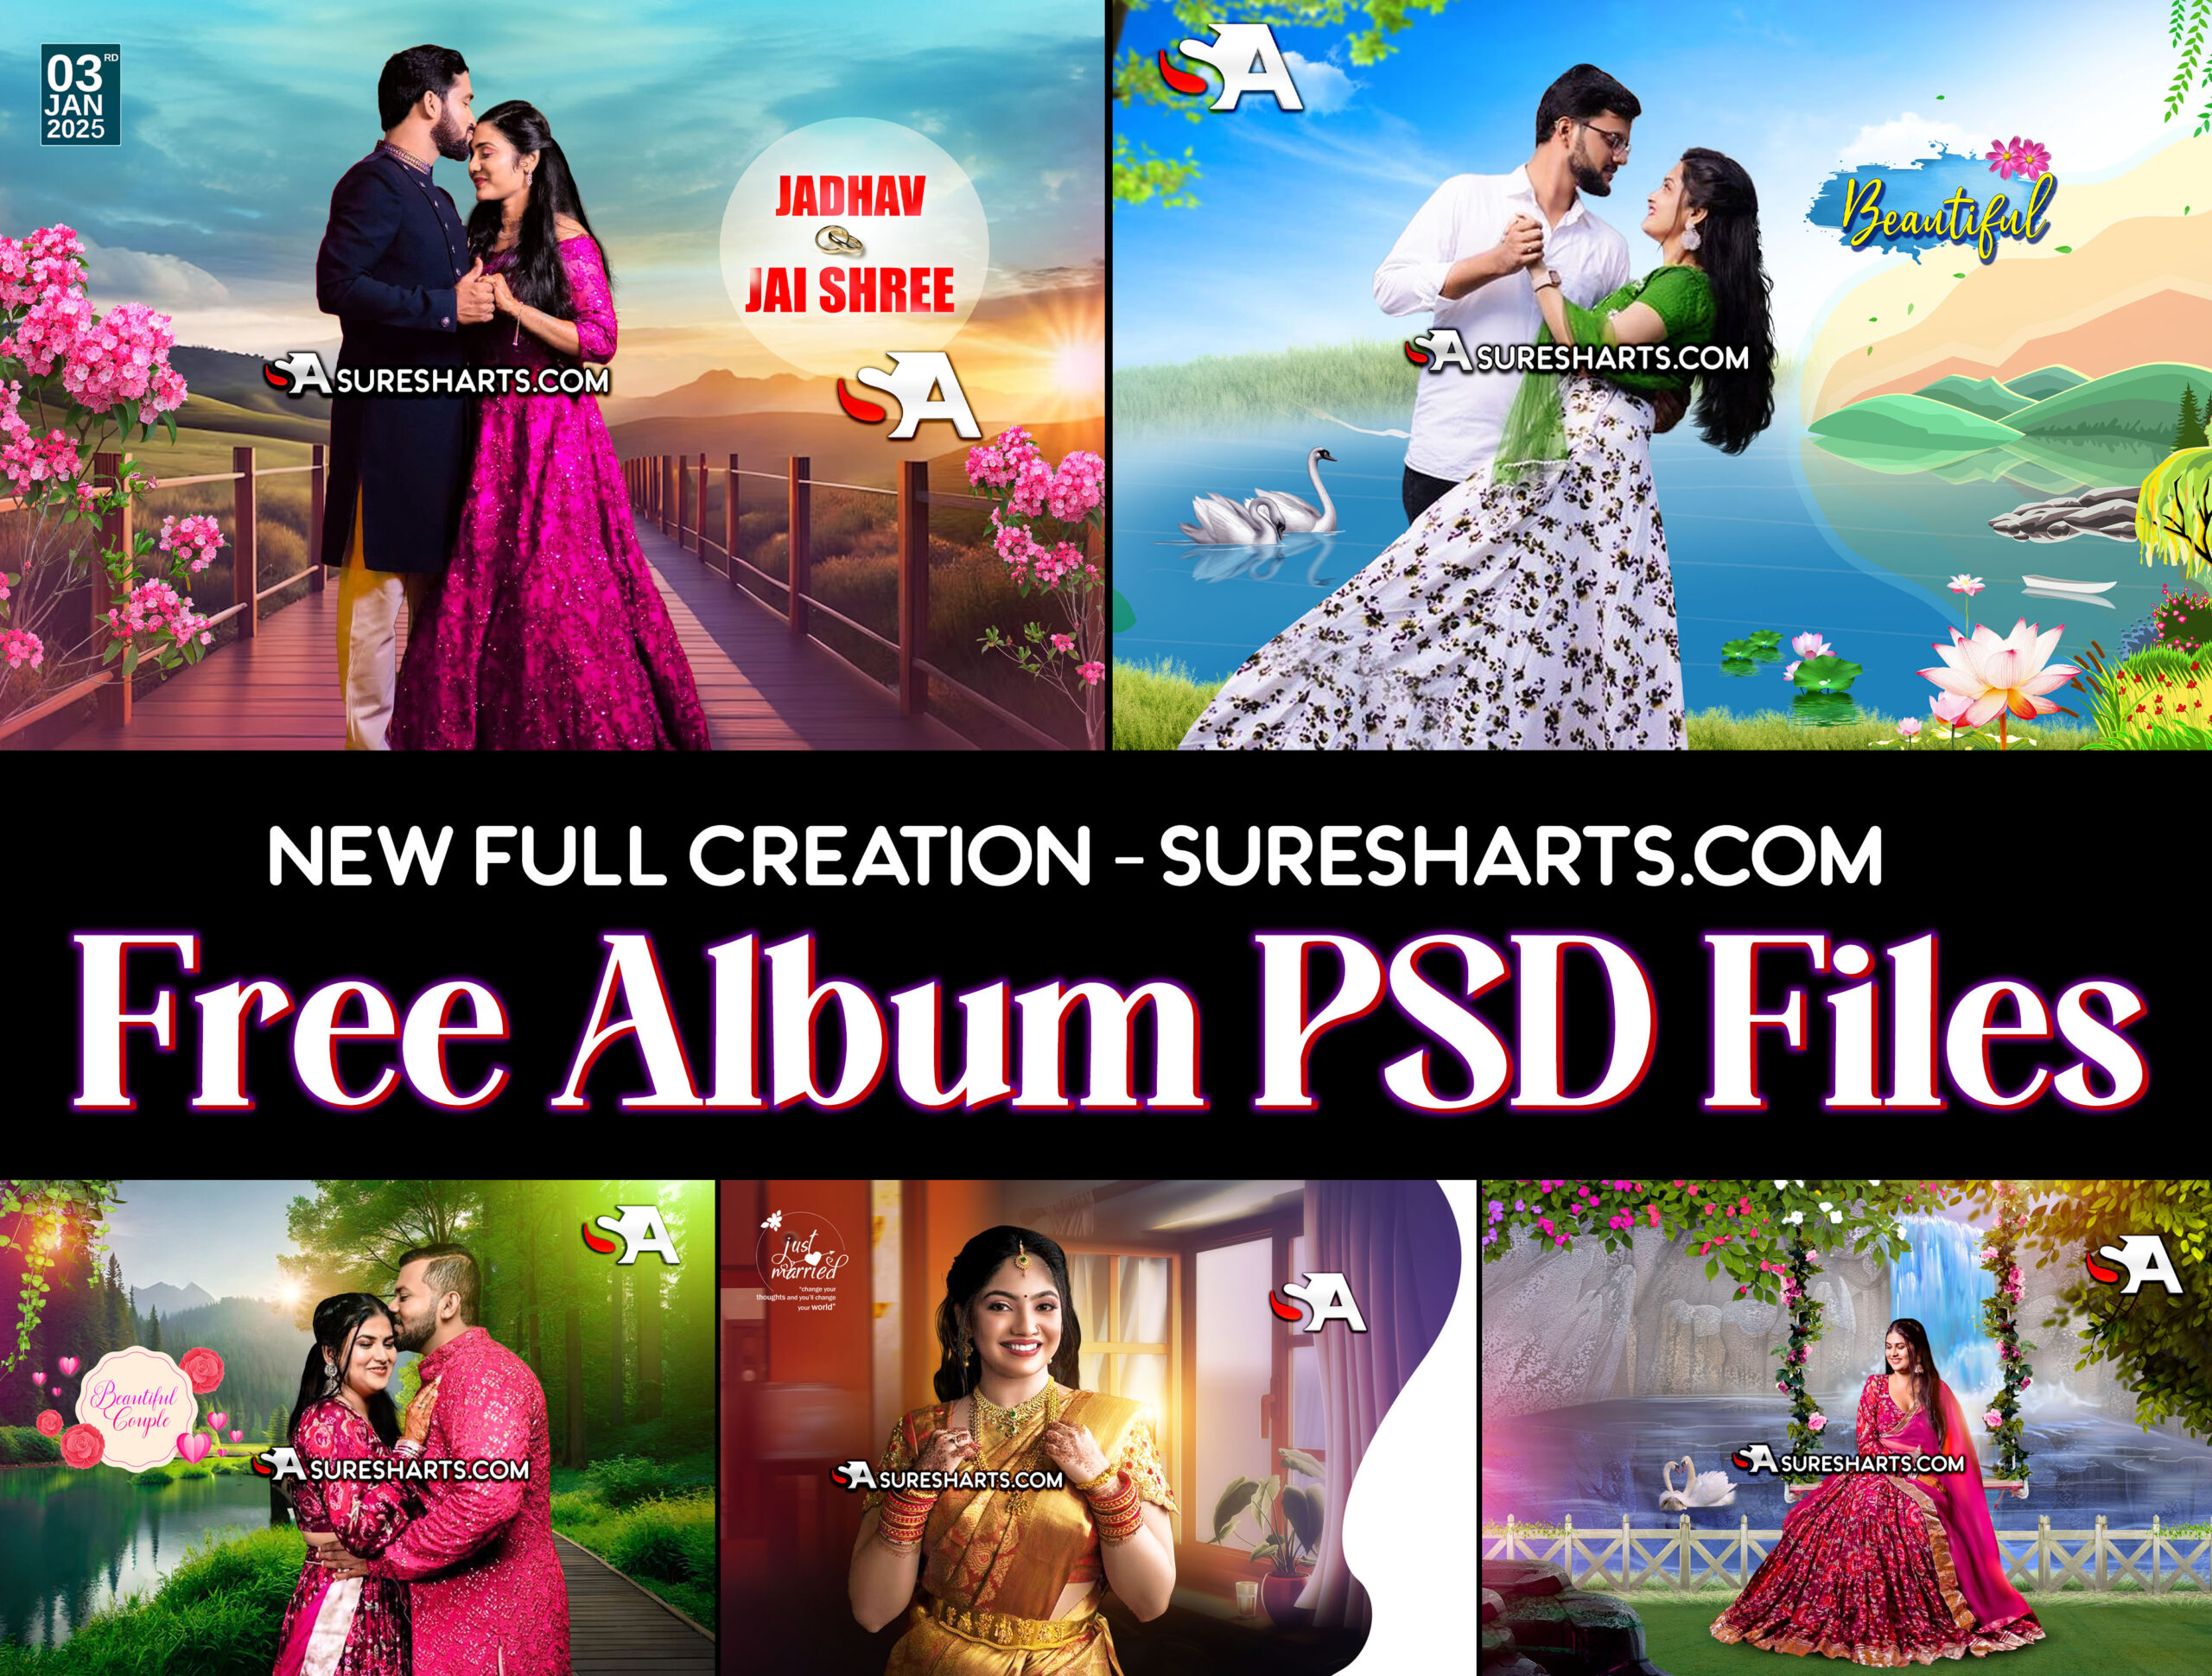 Free Download Uncharted 4  Uncharted, Wedding album design, Photoshop  design